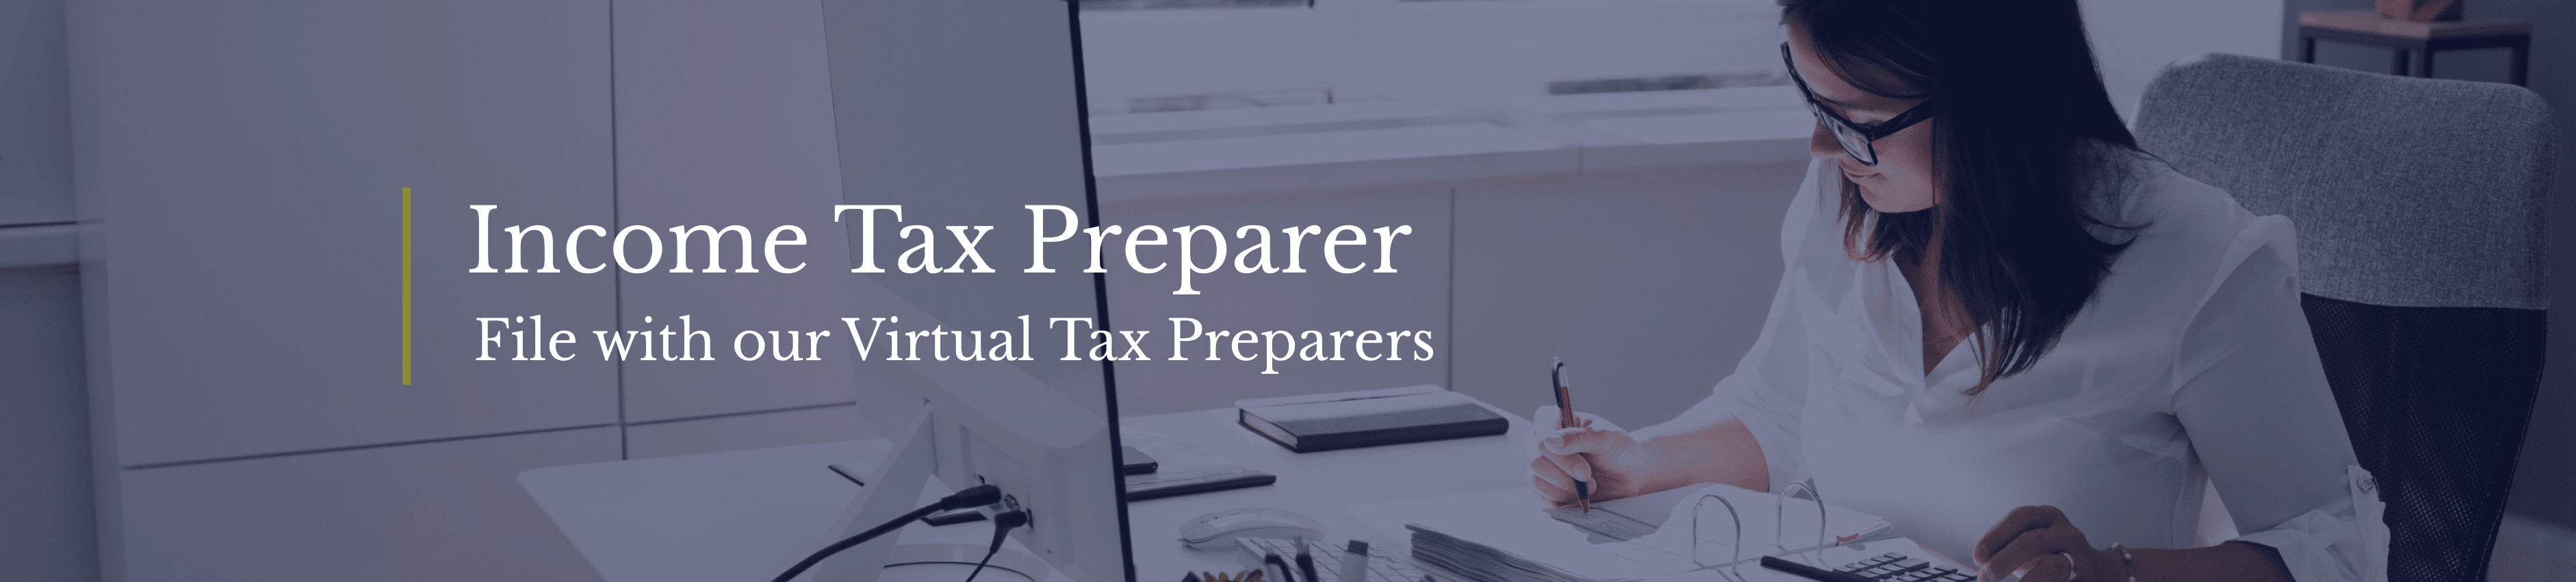 Income Tax Preparer - File with our virtual tax preparers